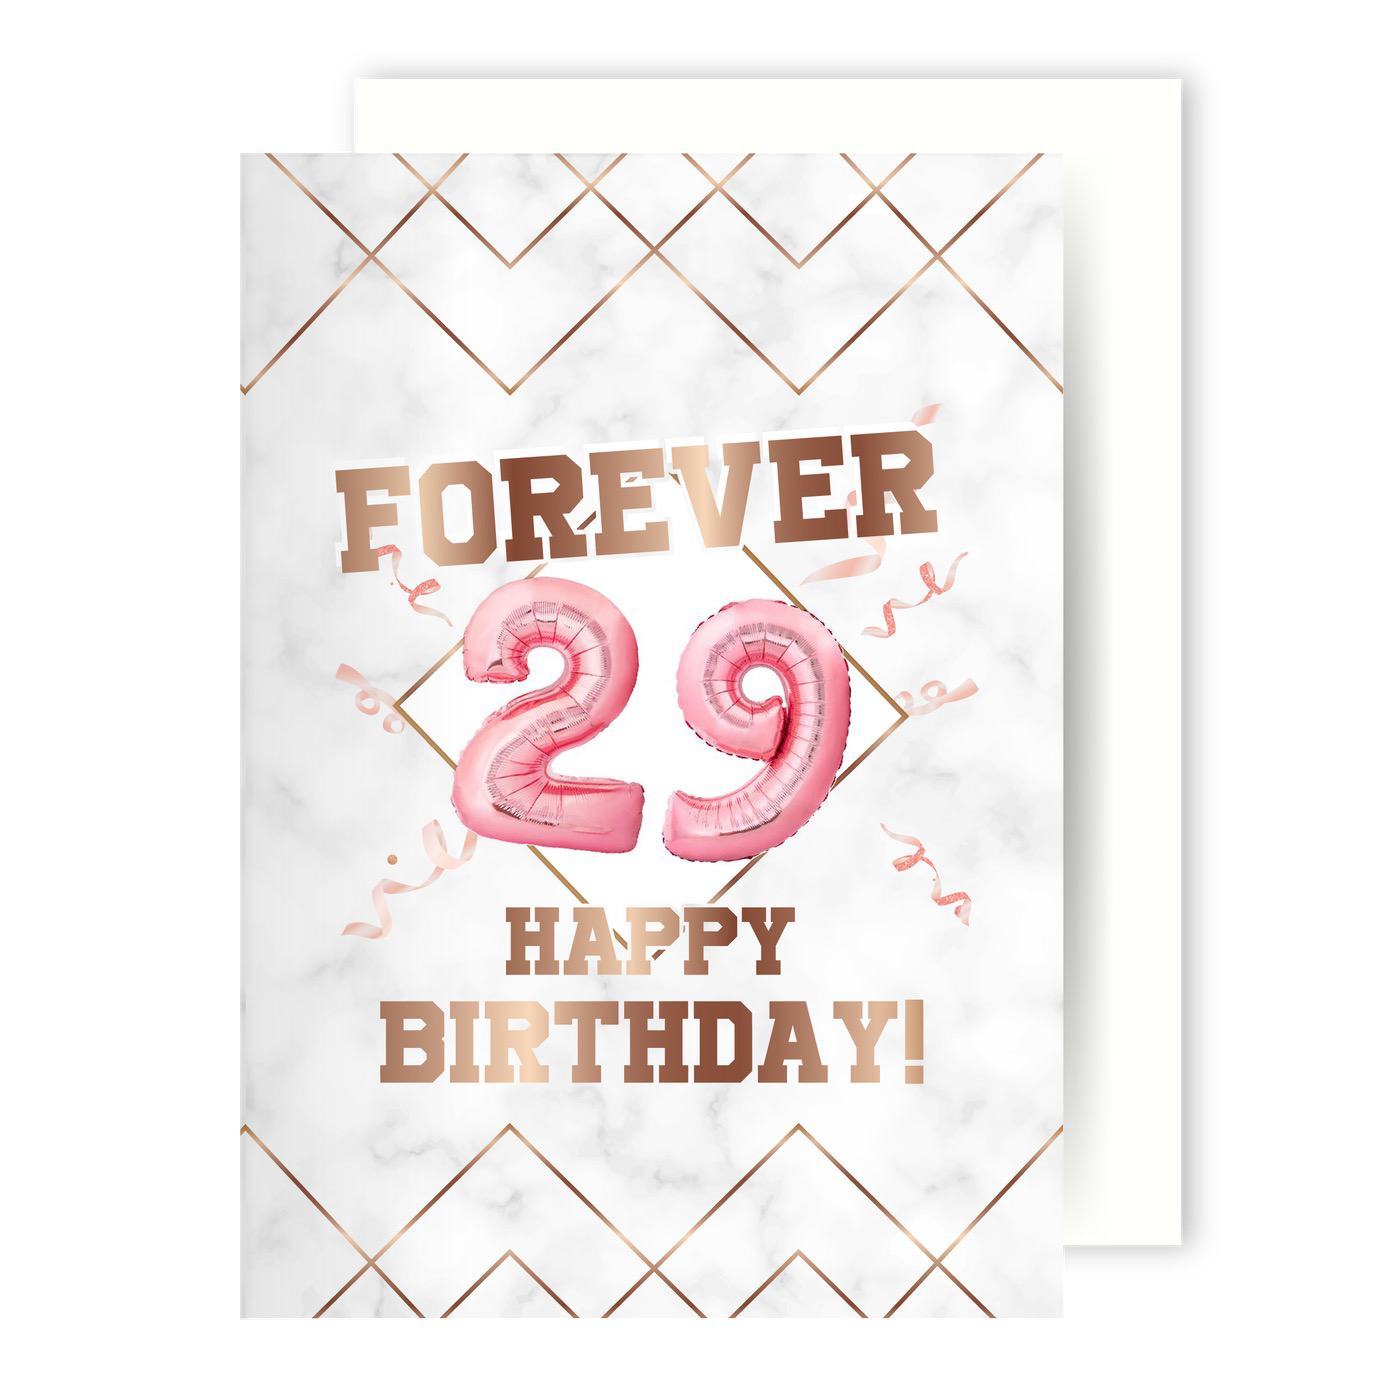 Bild: Geburtstagskarte - Forever 29 Happy Birthday Geschenkidee